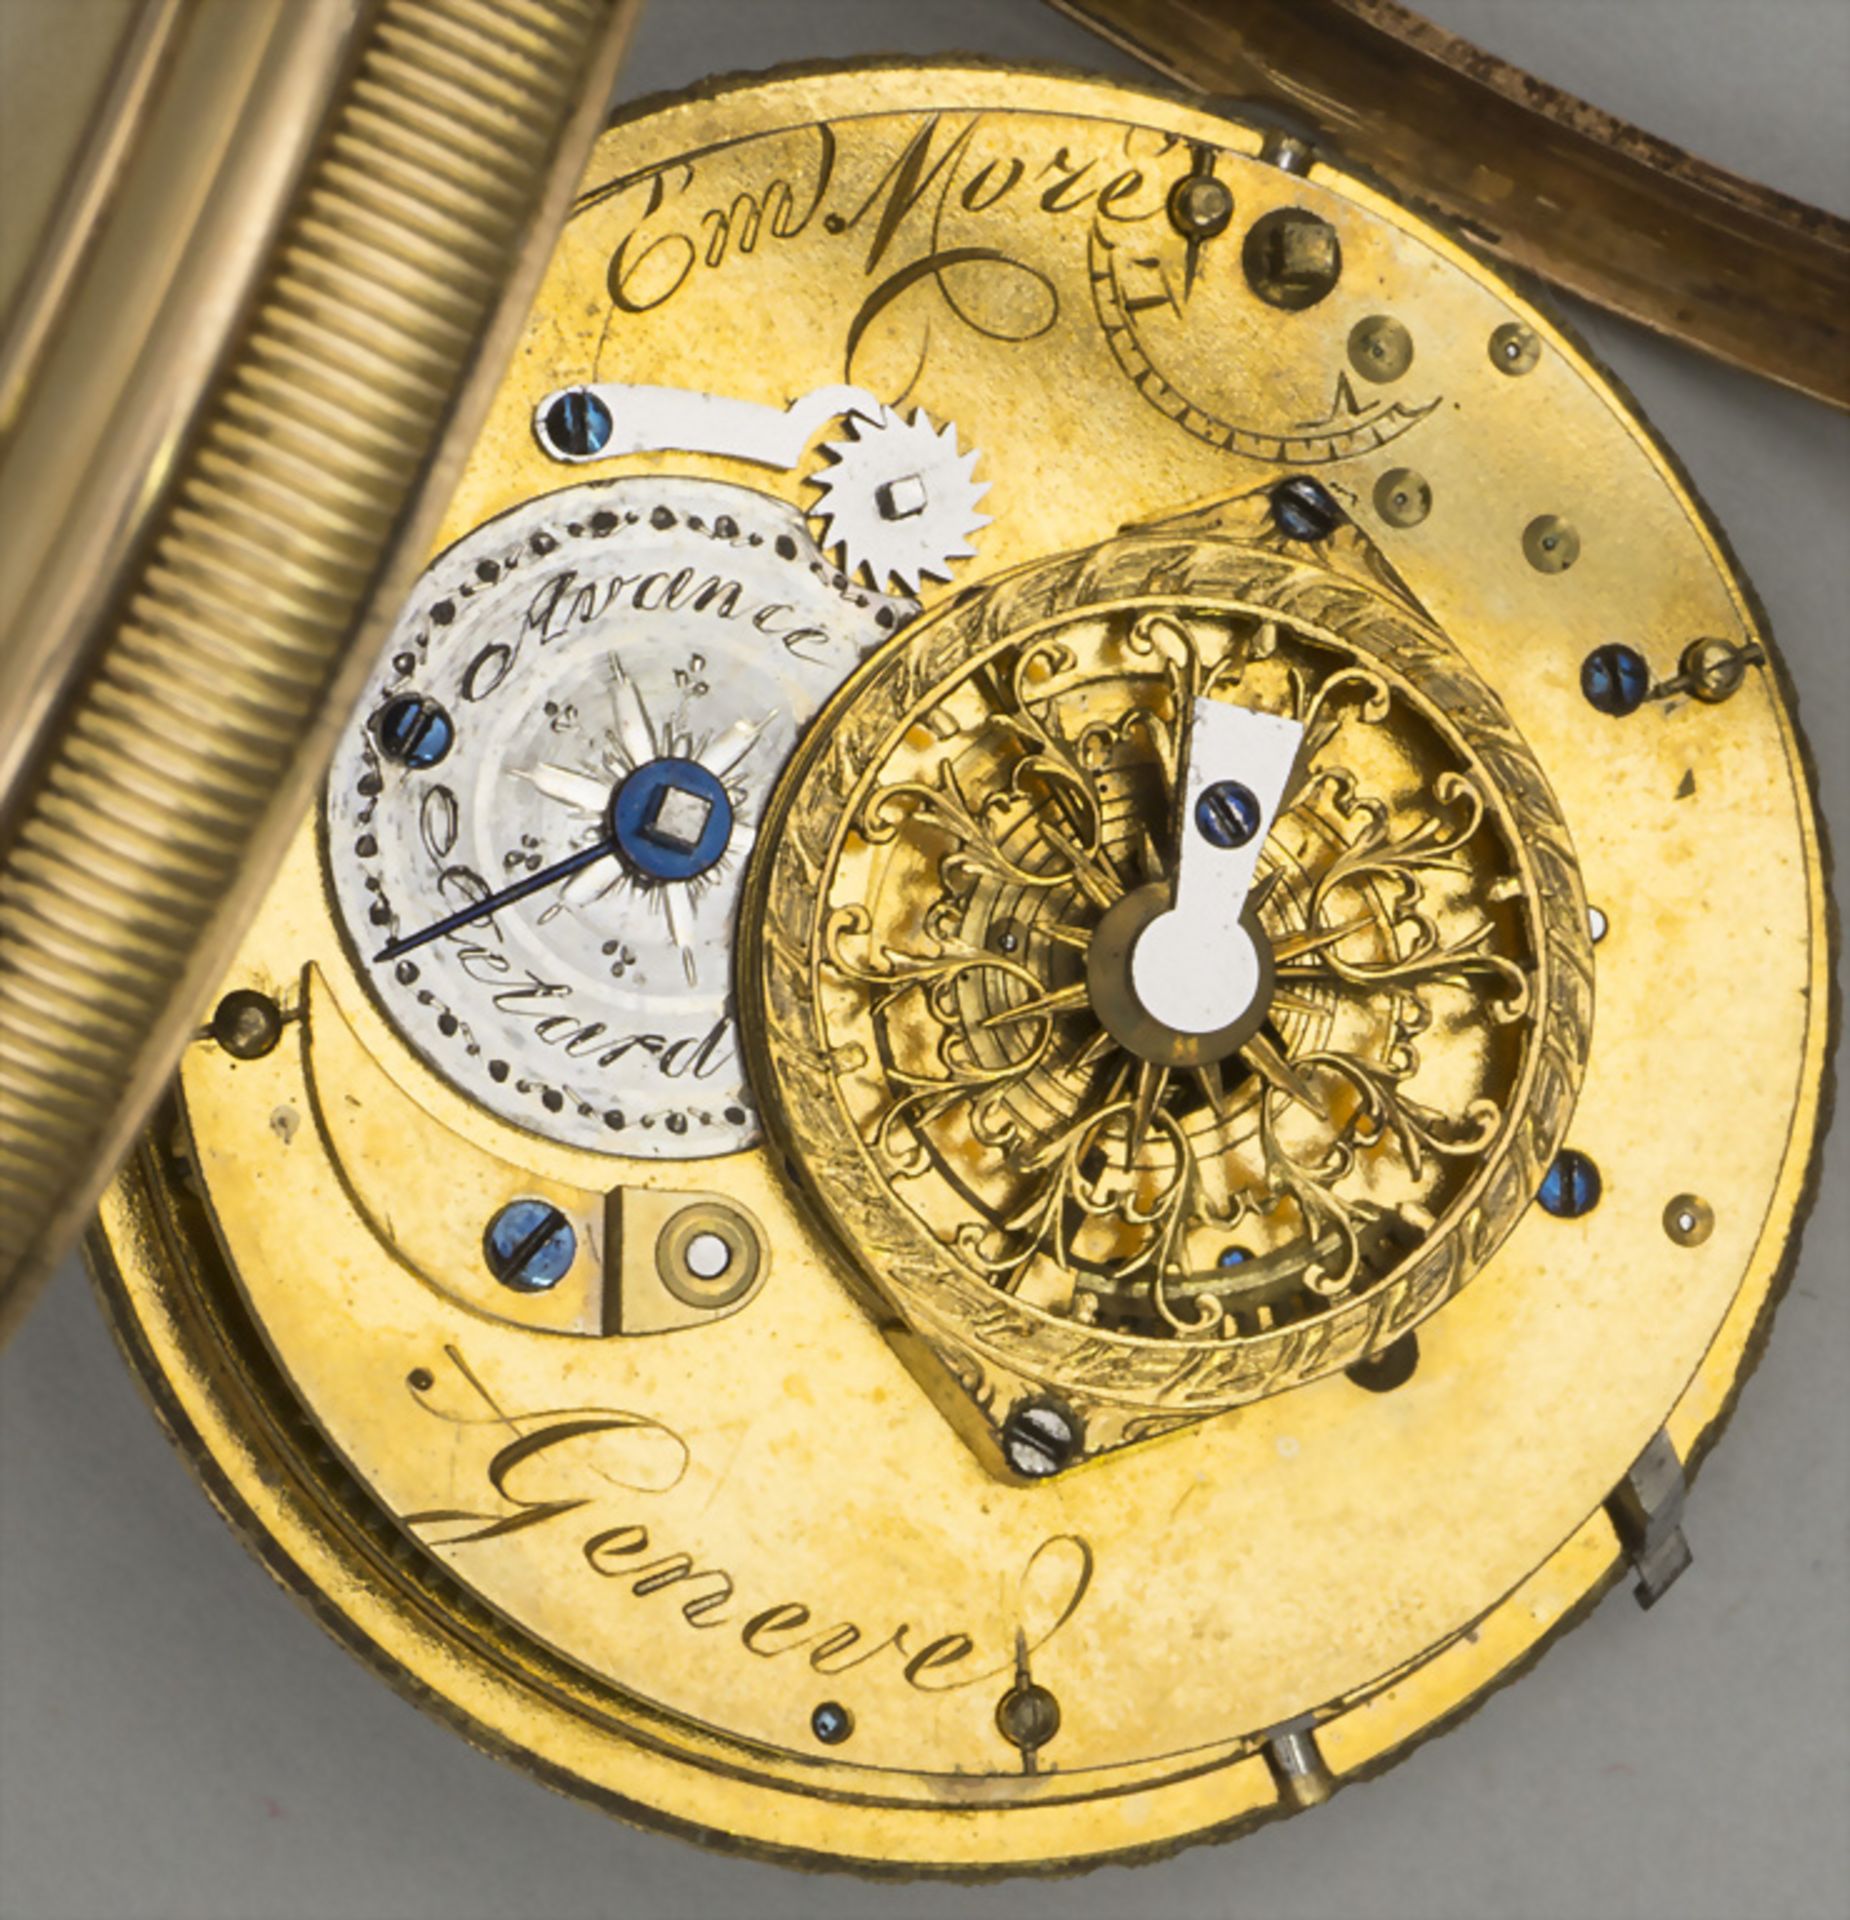 Offene Taschenuhr / An 18k gold open faced watch, Emile Moré à Geneve, Genf, um 1800 - Image 4 of 5